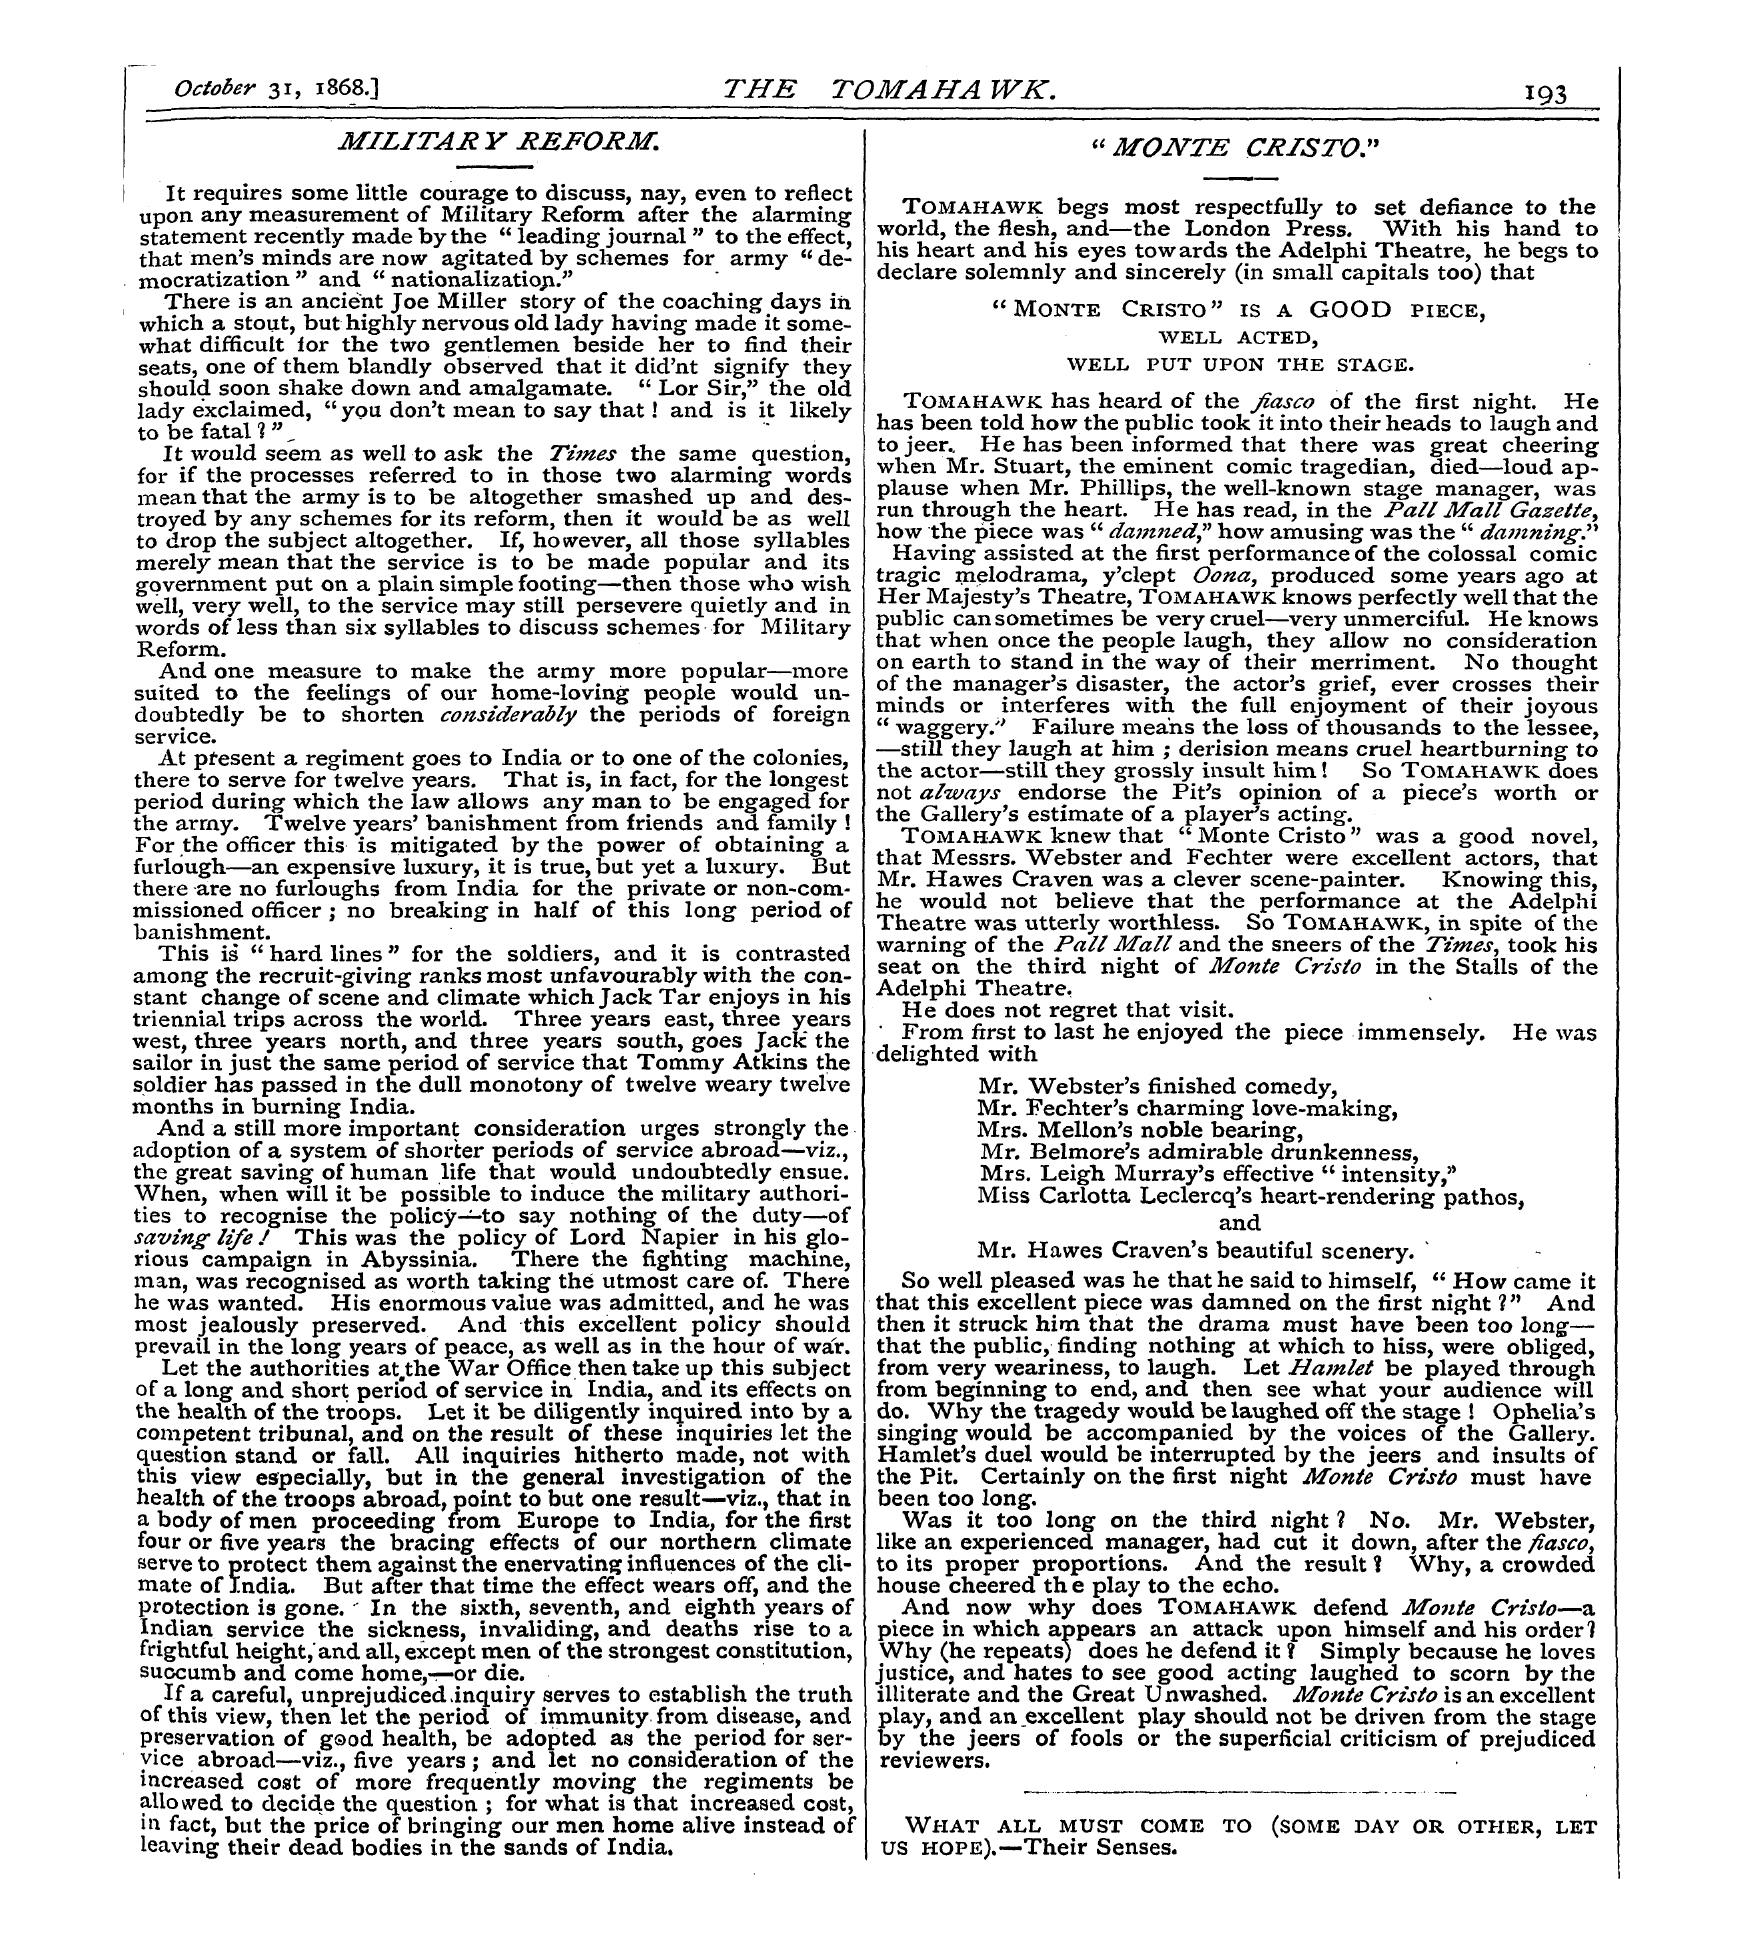 Tomahawk (1867-1870): jS F Y, 1st edition - " Monte Cristo".